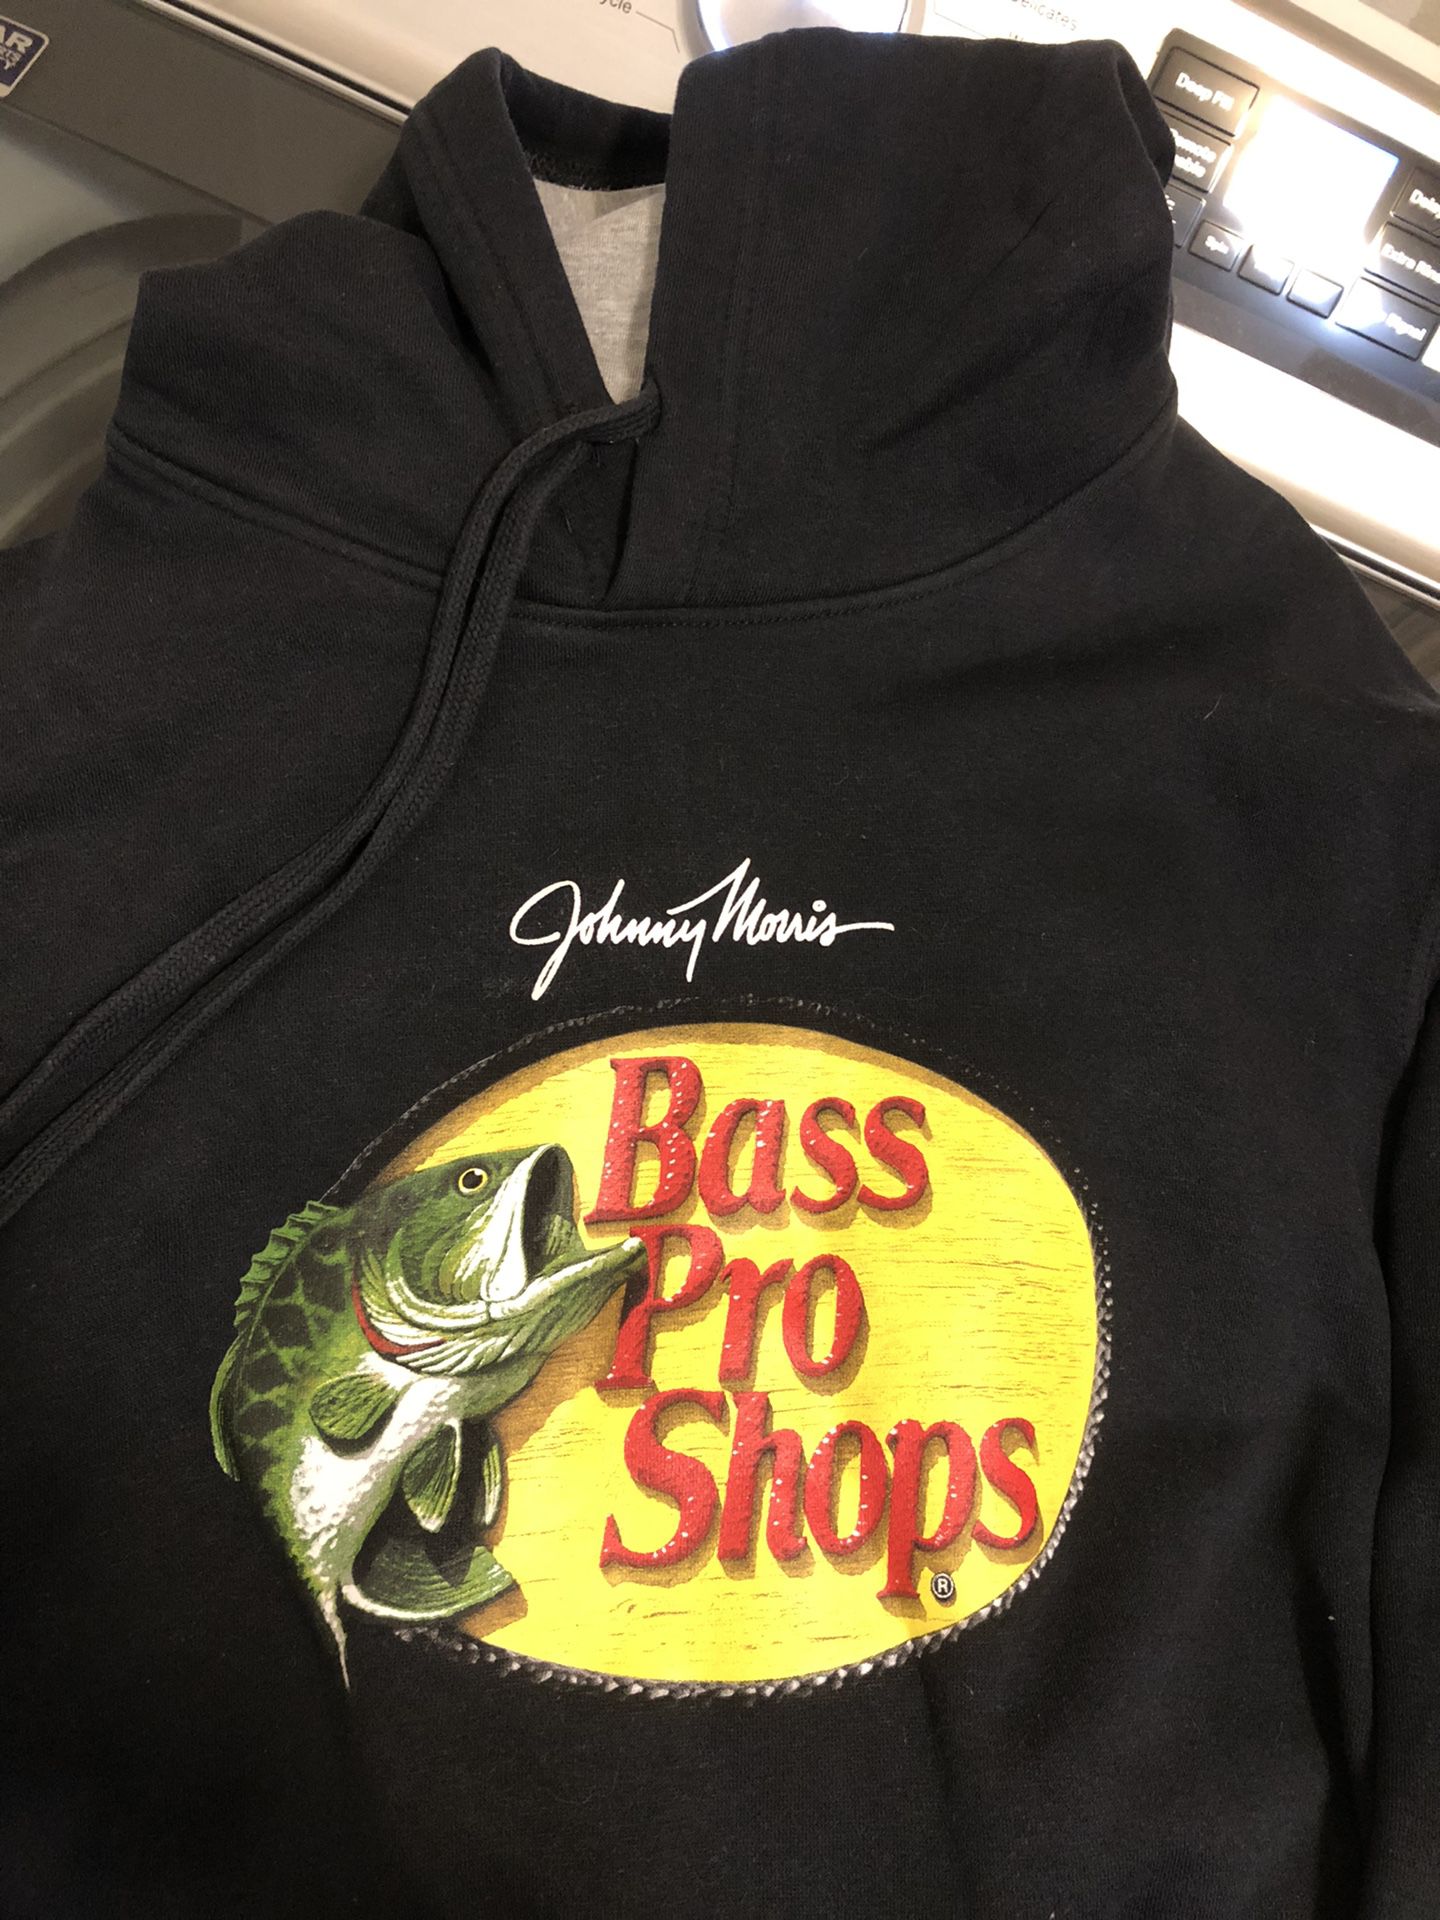 Bass Pro Shops hoodie